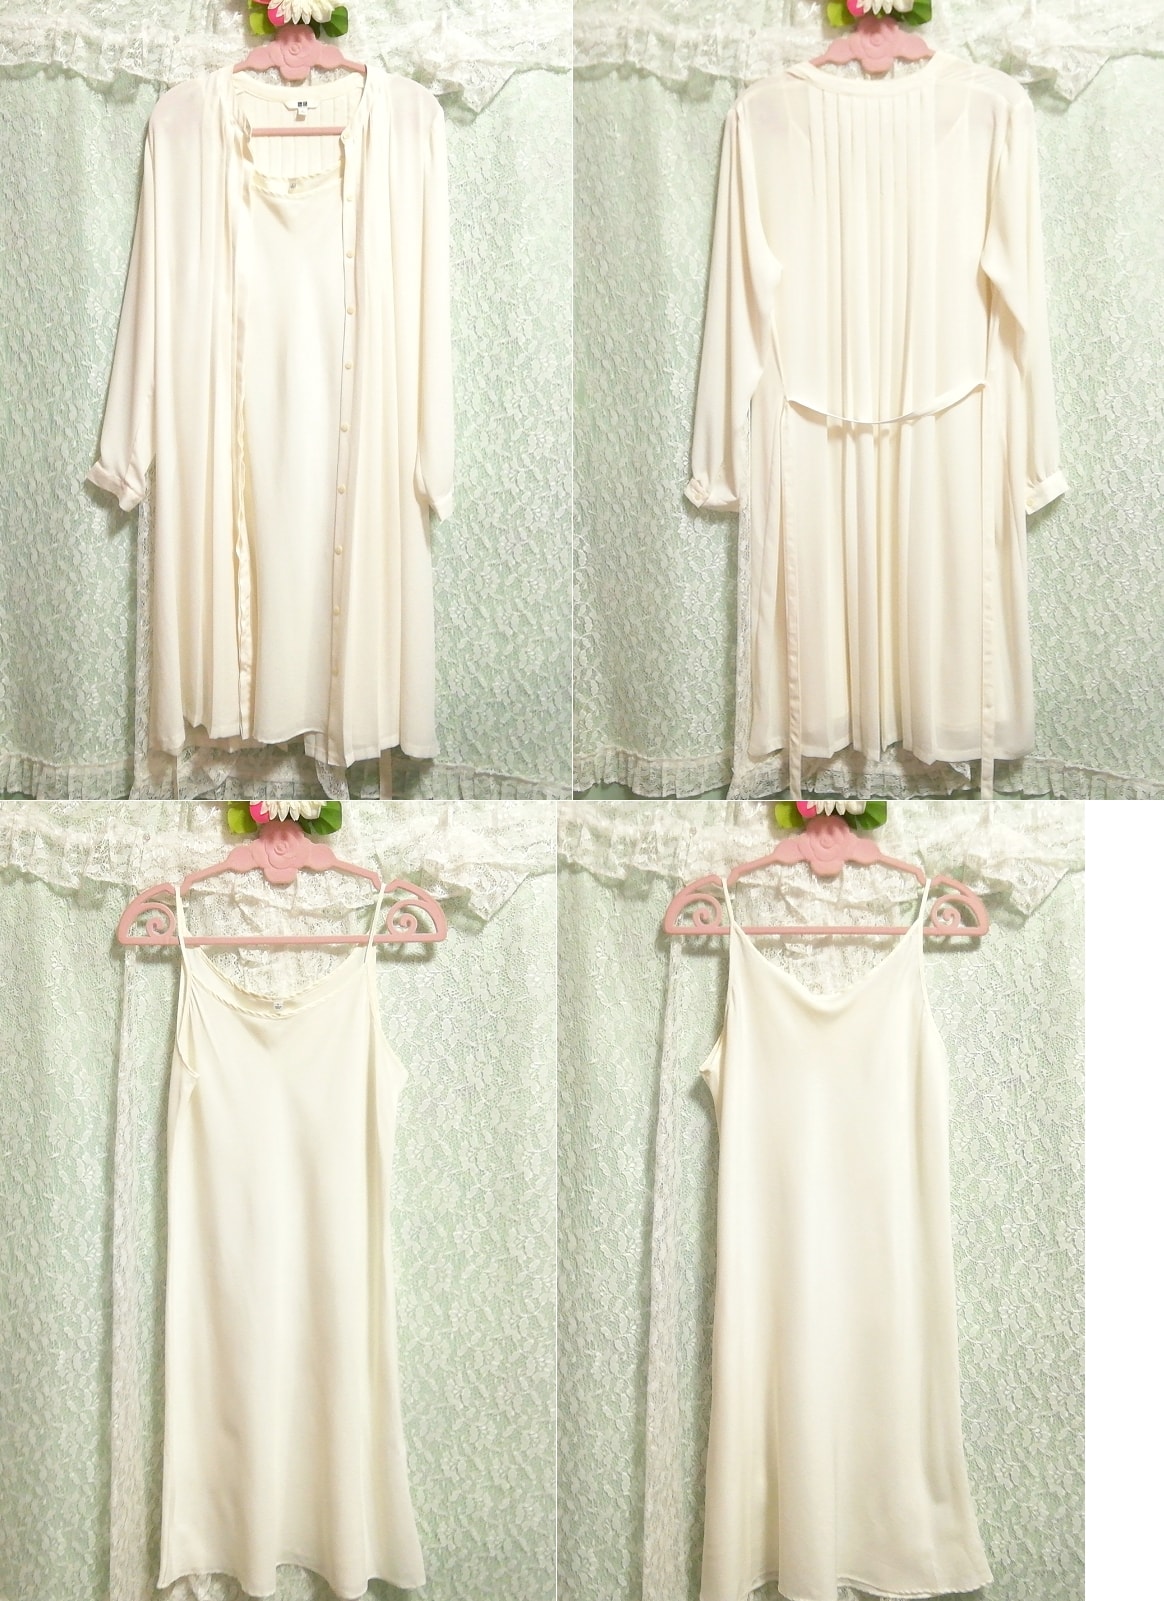 Floral white plain chiffon haori gown negligee nightgown camisole dress 2P, fashion, ladies' fashion, nightwear, pajamas